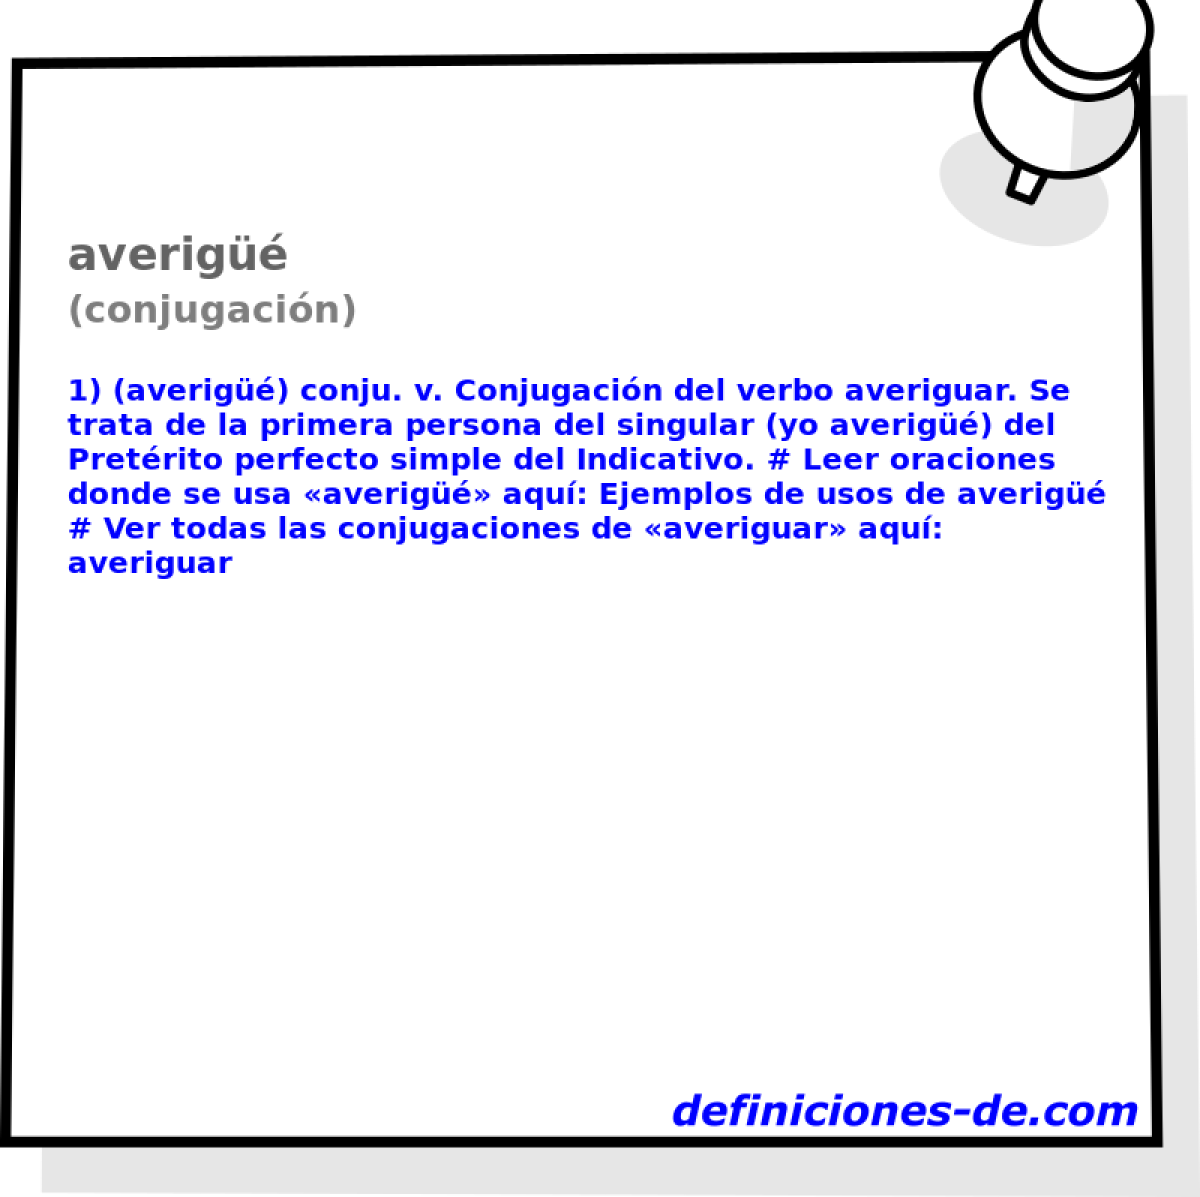 averig (conjugacin)